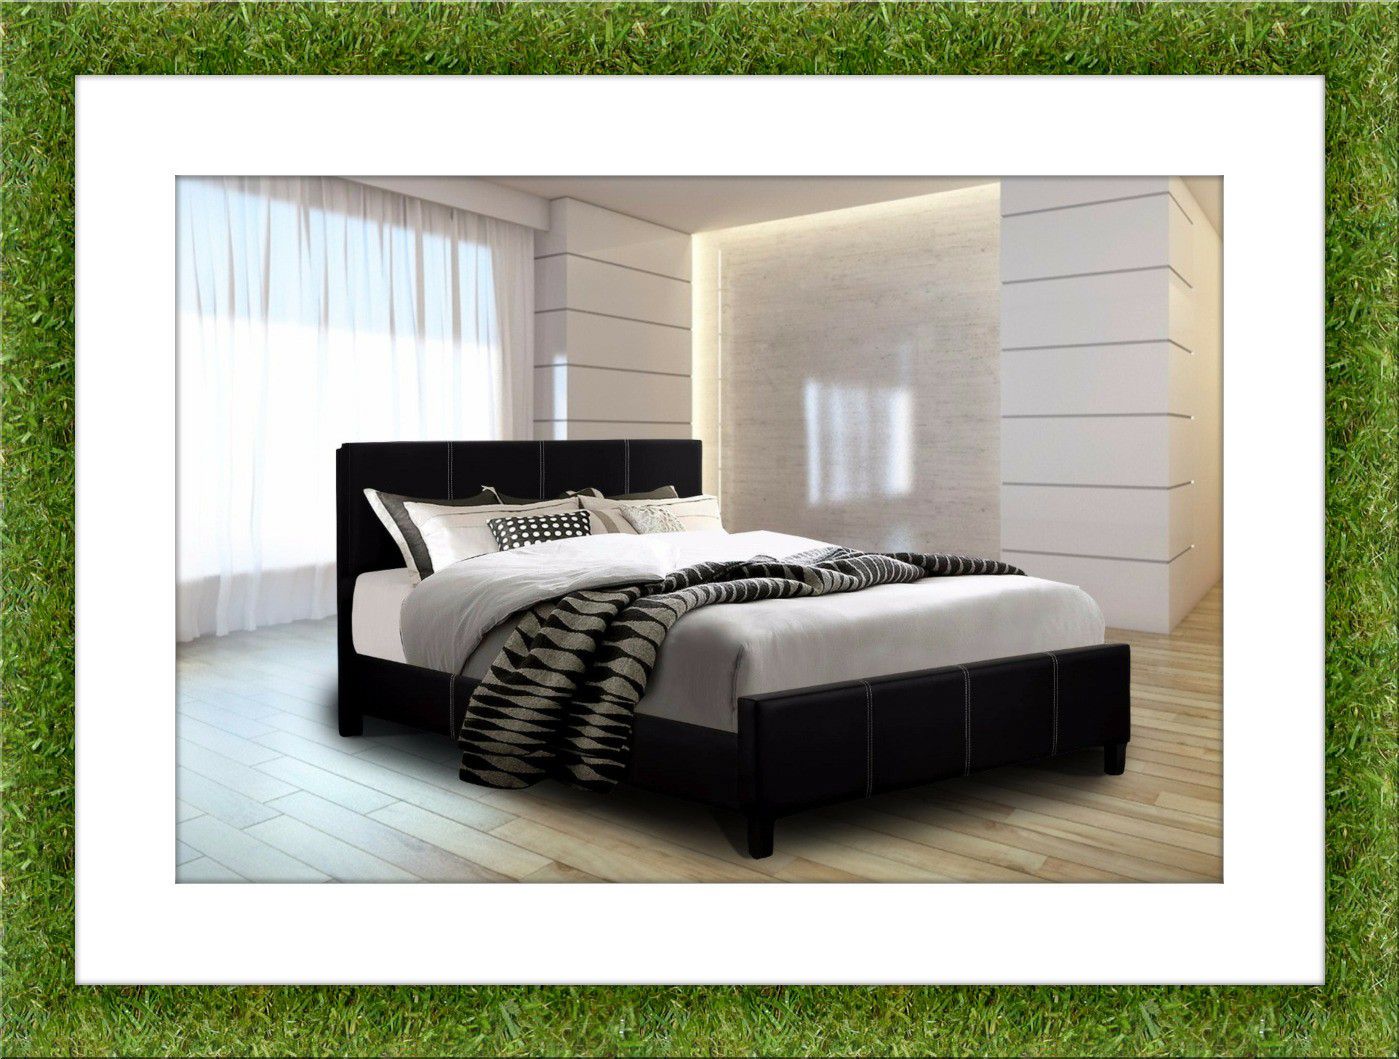 Platform bed black free mattress and shipping